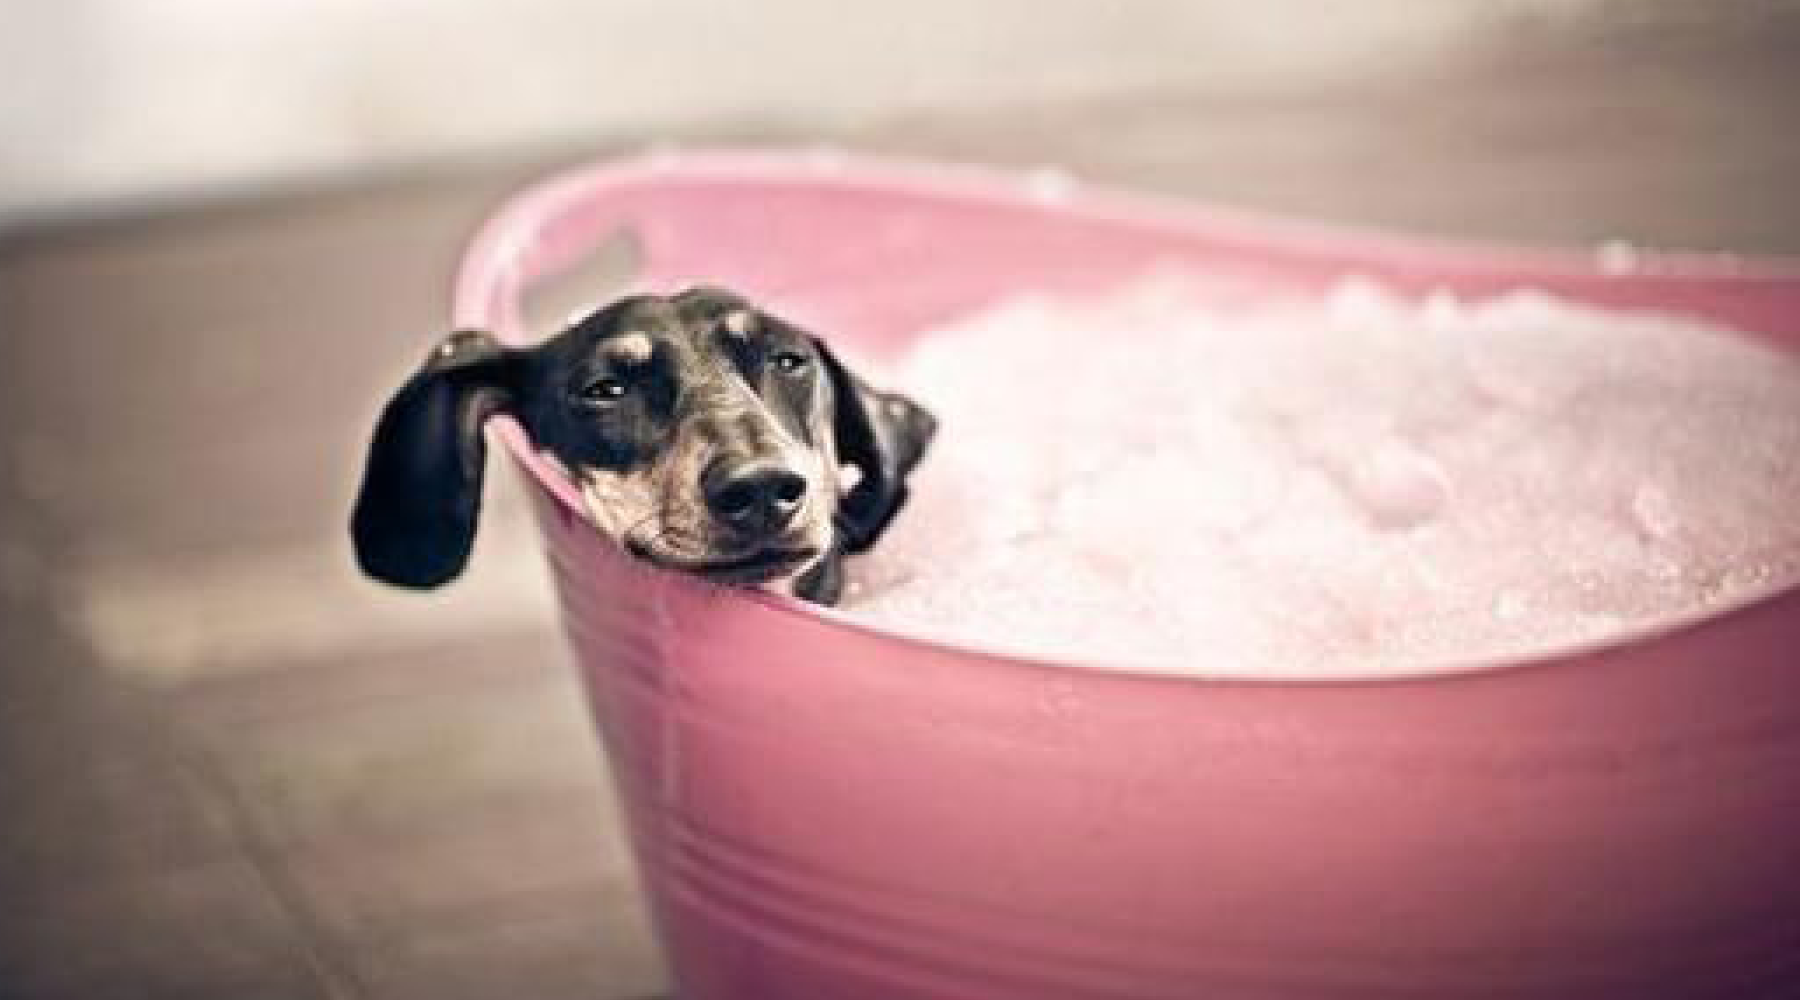 do dogs like getting baths